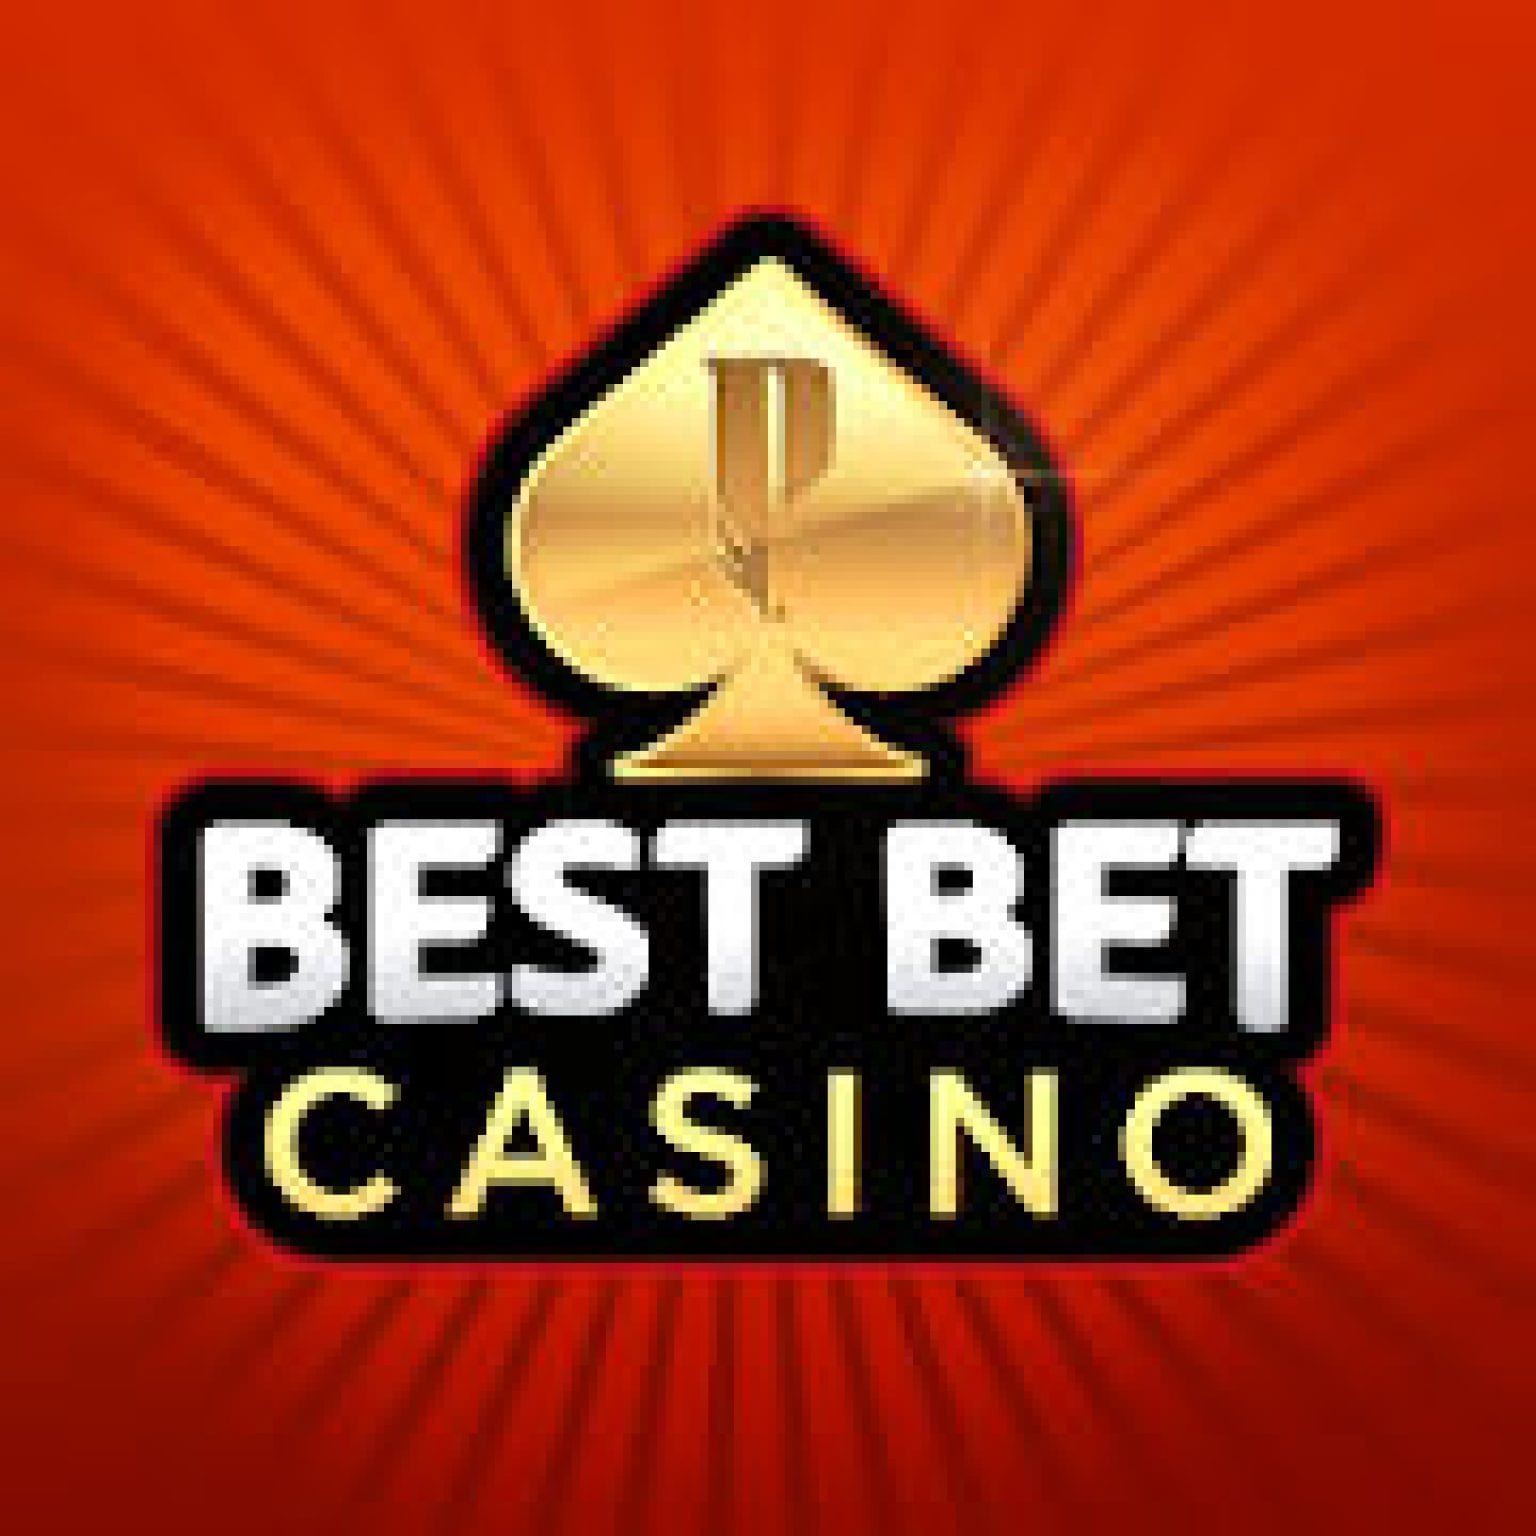 bet-casino-live